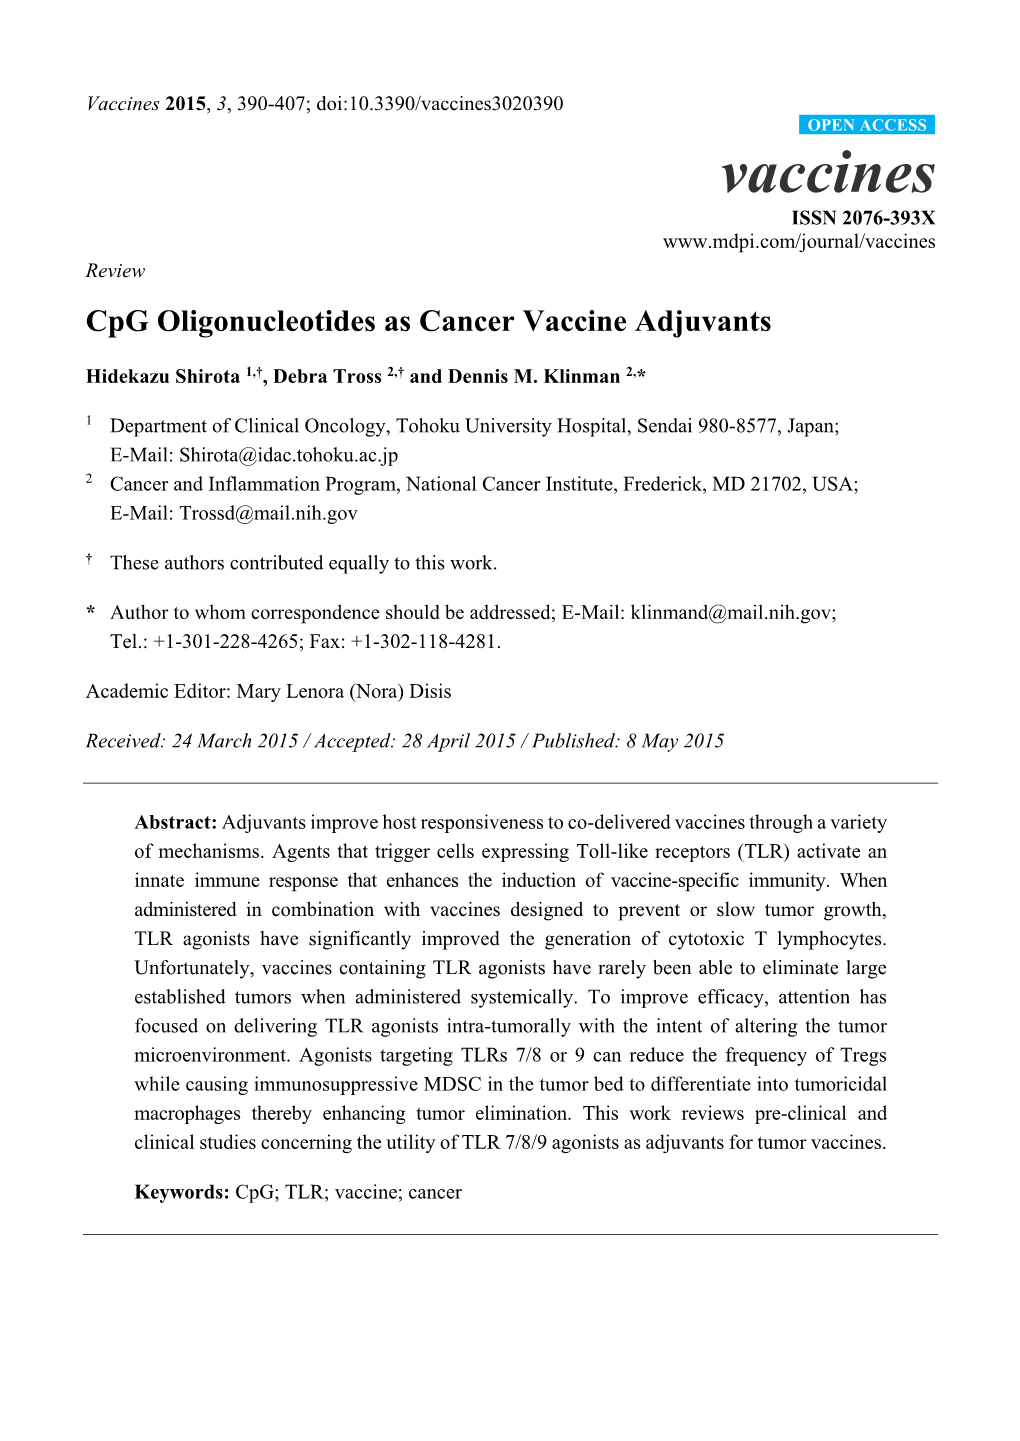 Cpg Oligonucleotides As Cancer Vaccine Adjuvants